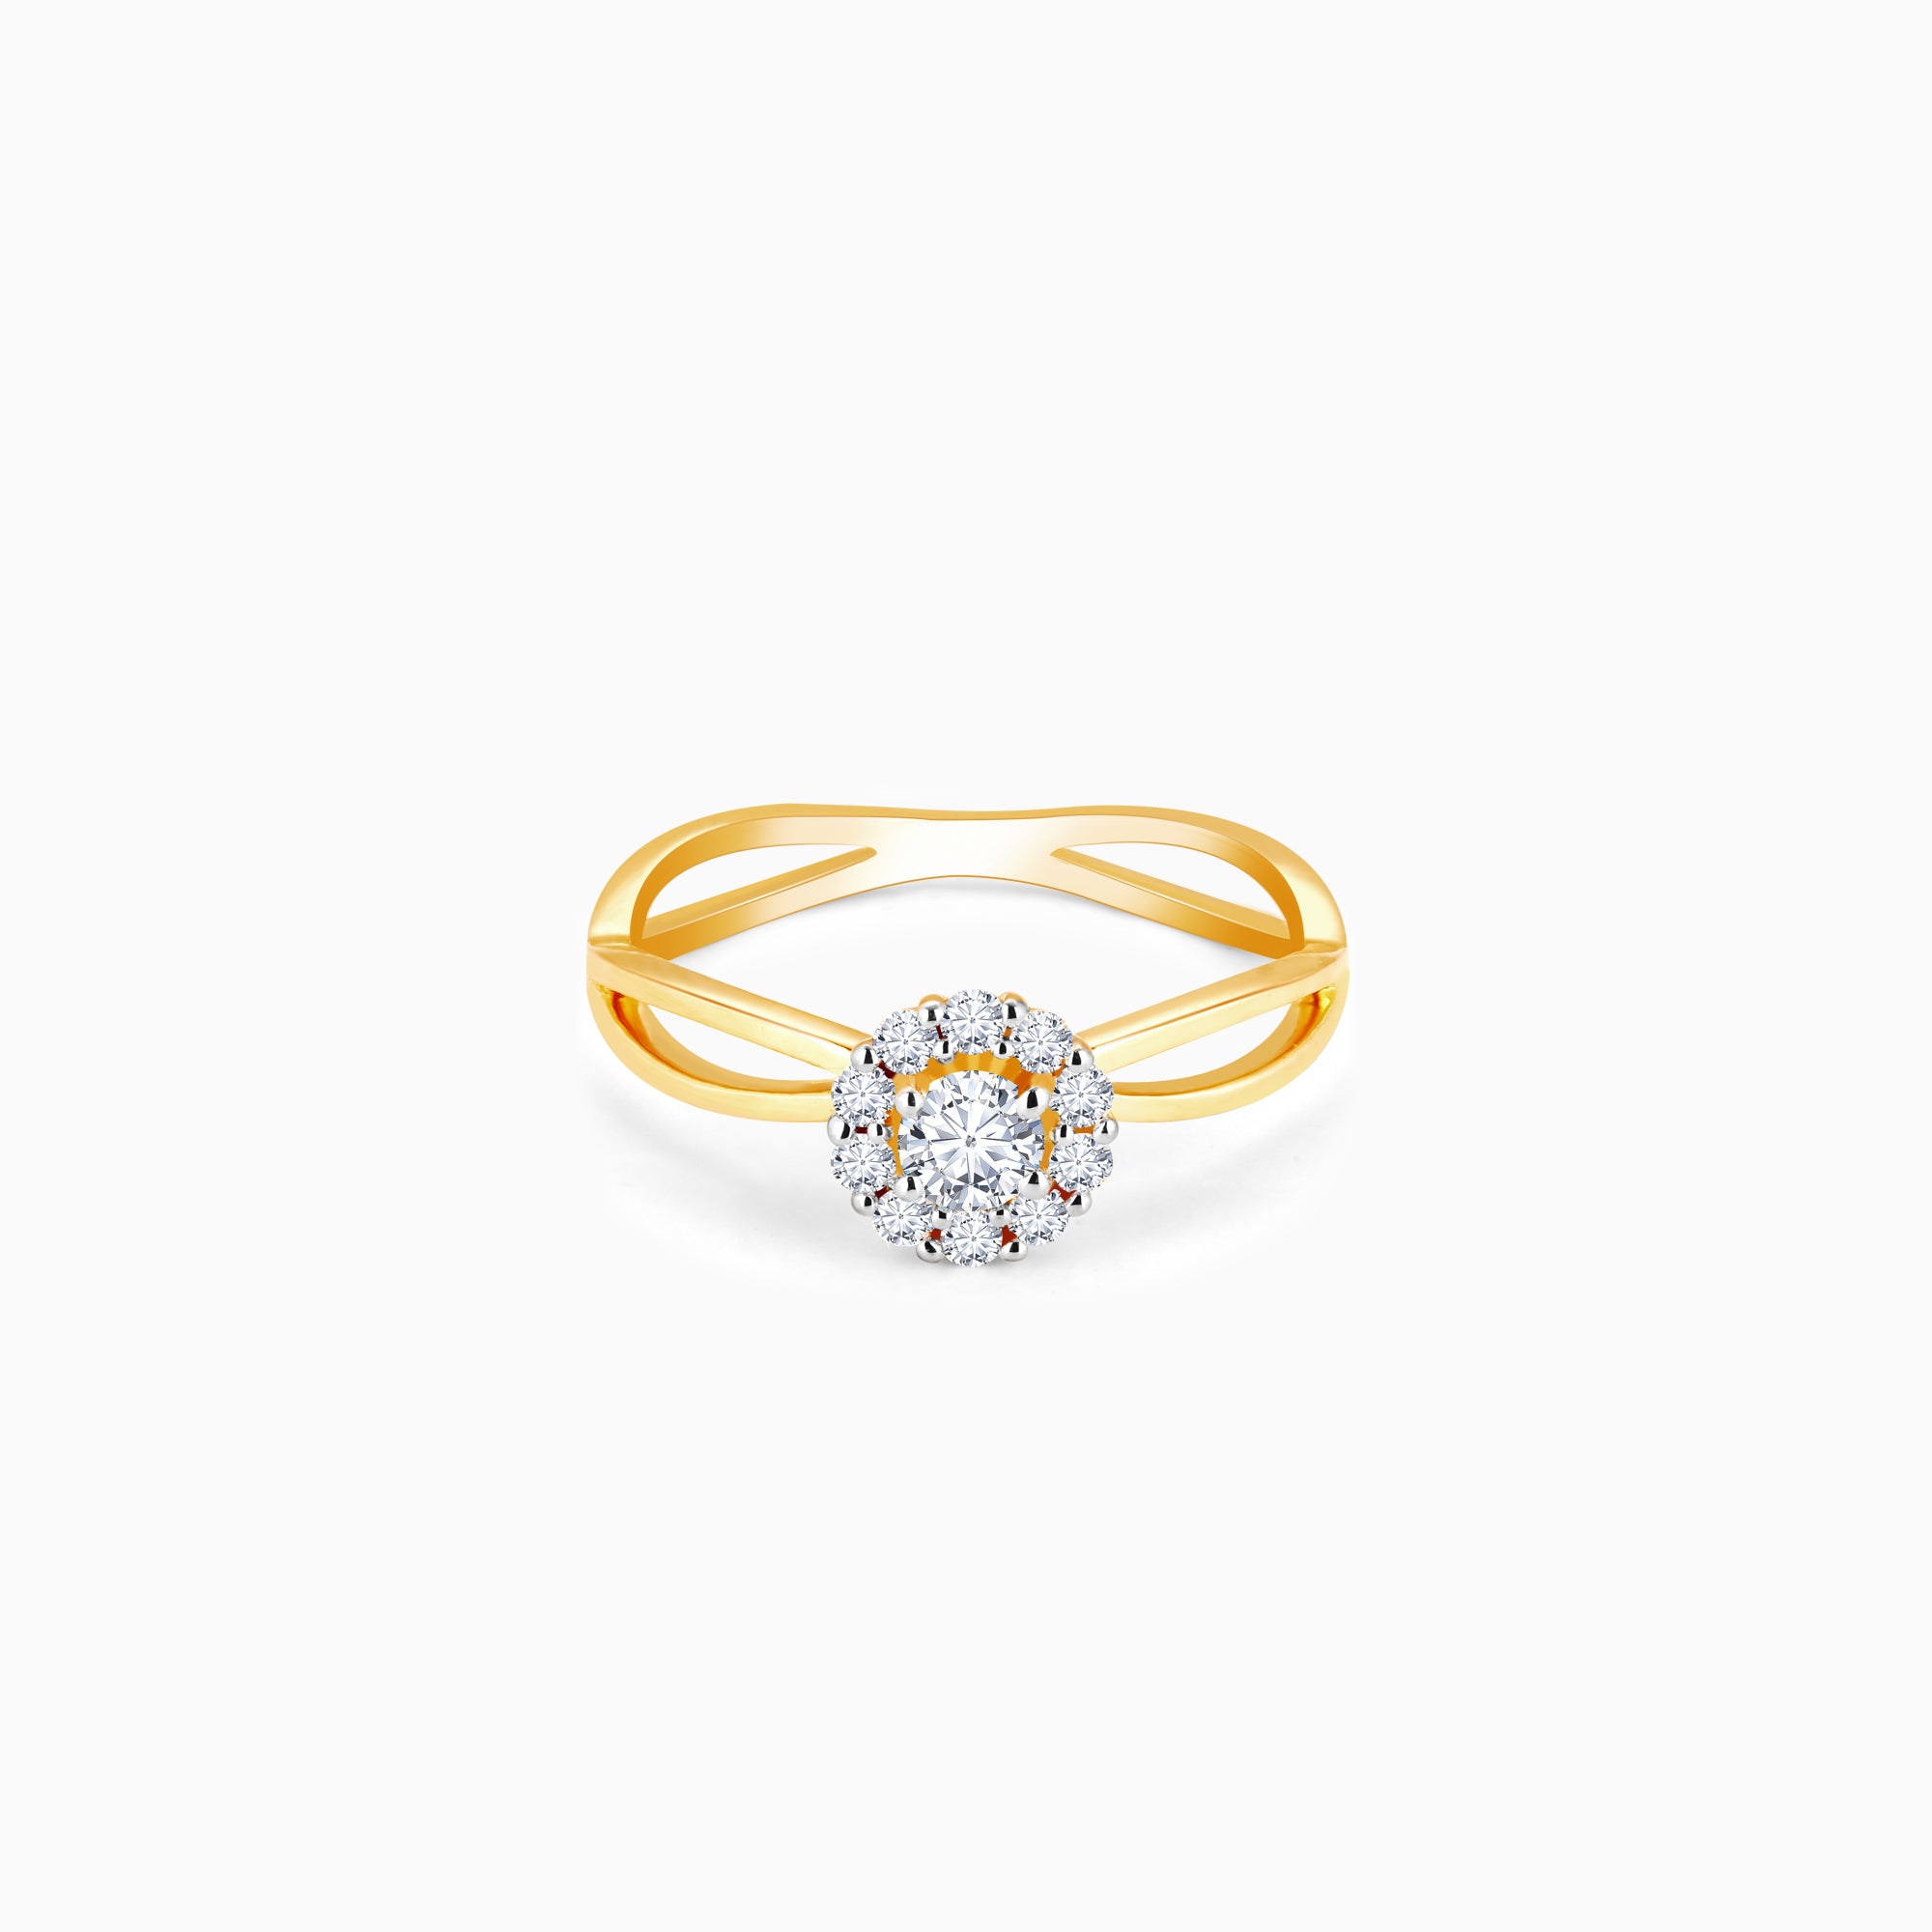 Handmade 22k Gold & Enamel Solitaire Diamond Bridal Wedding Engagement Ring  - A&V Pawn